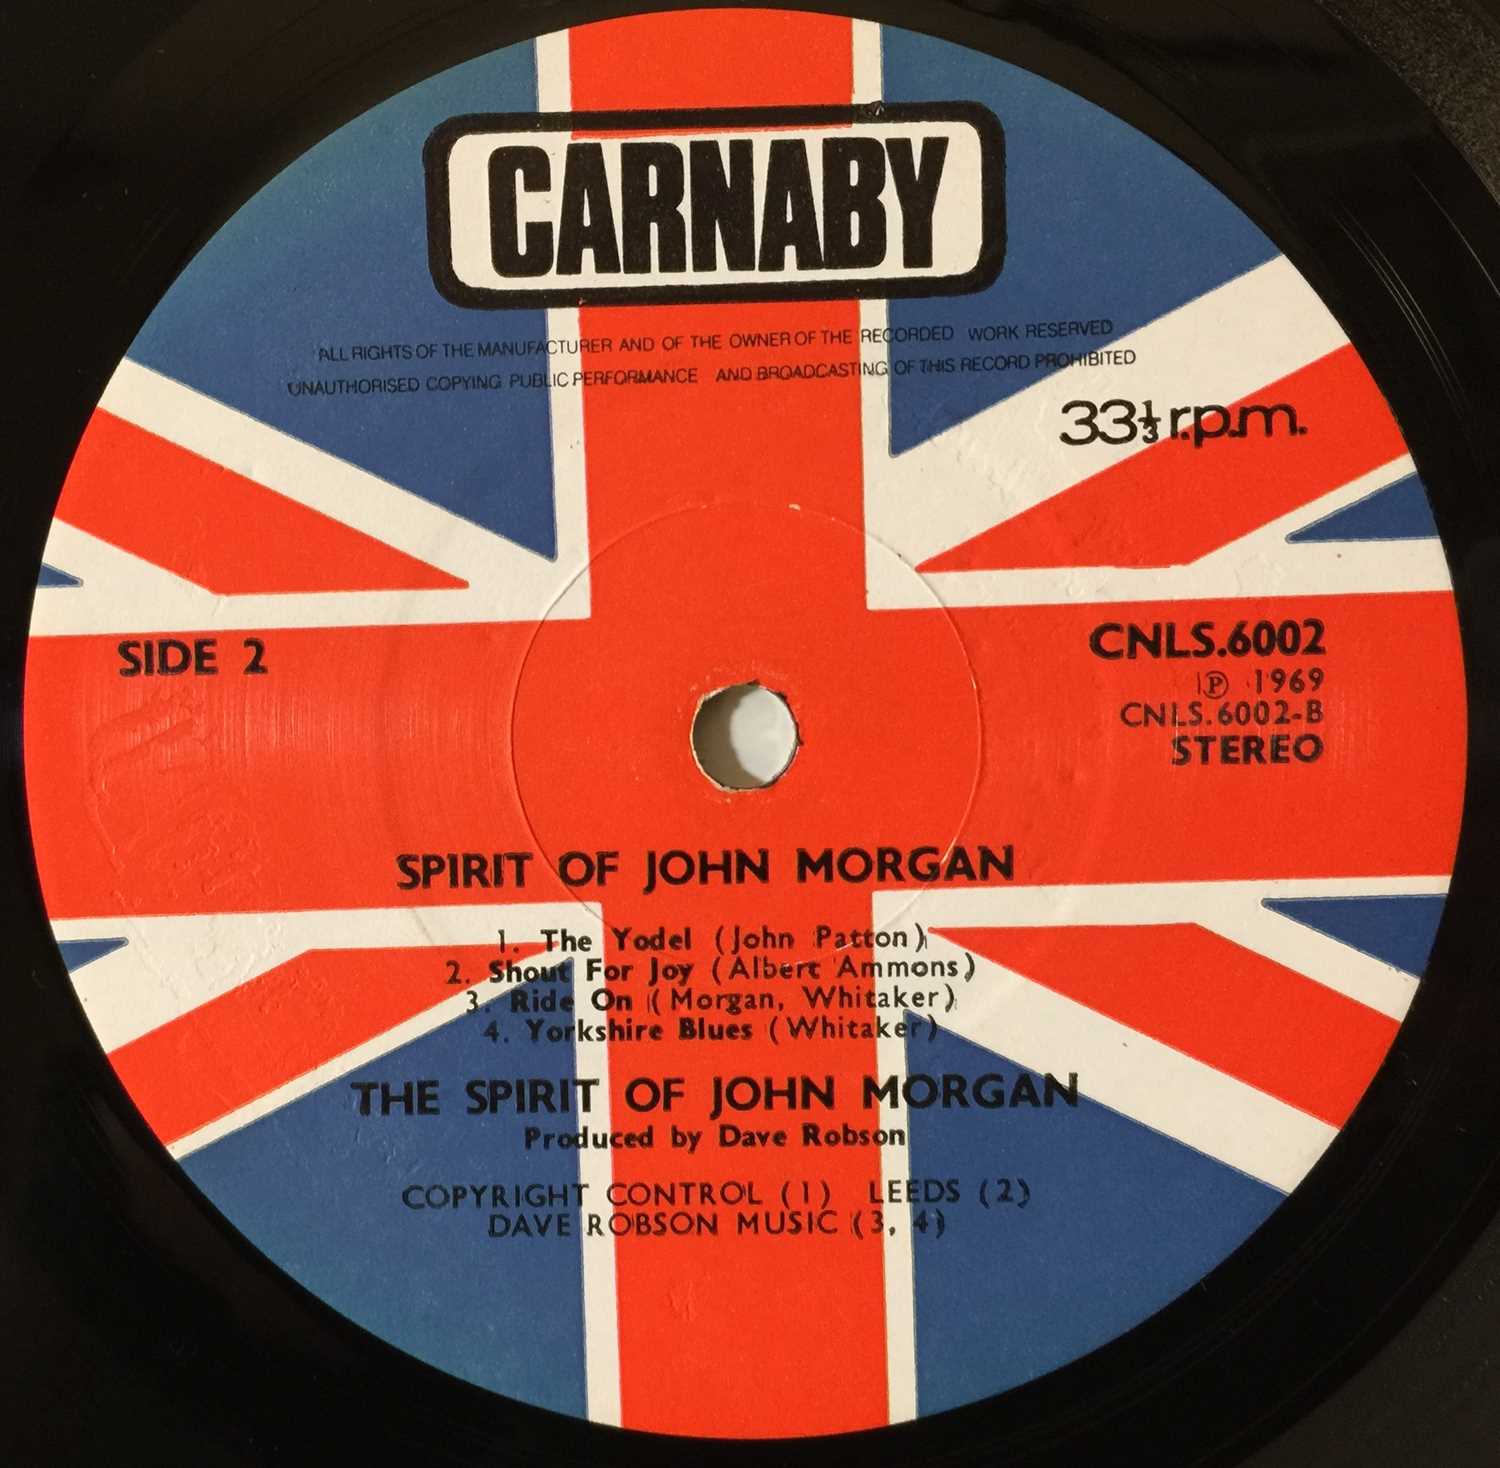 Lot 16 - SPIRIT OF JOHN MORGAN - S/T LP (UK STEREO